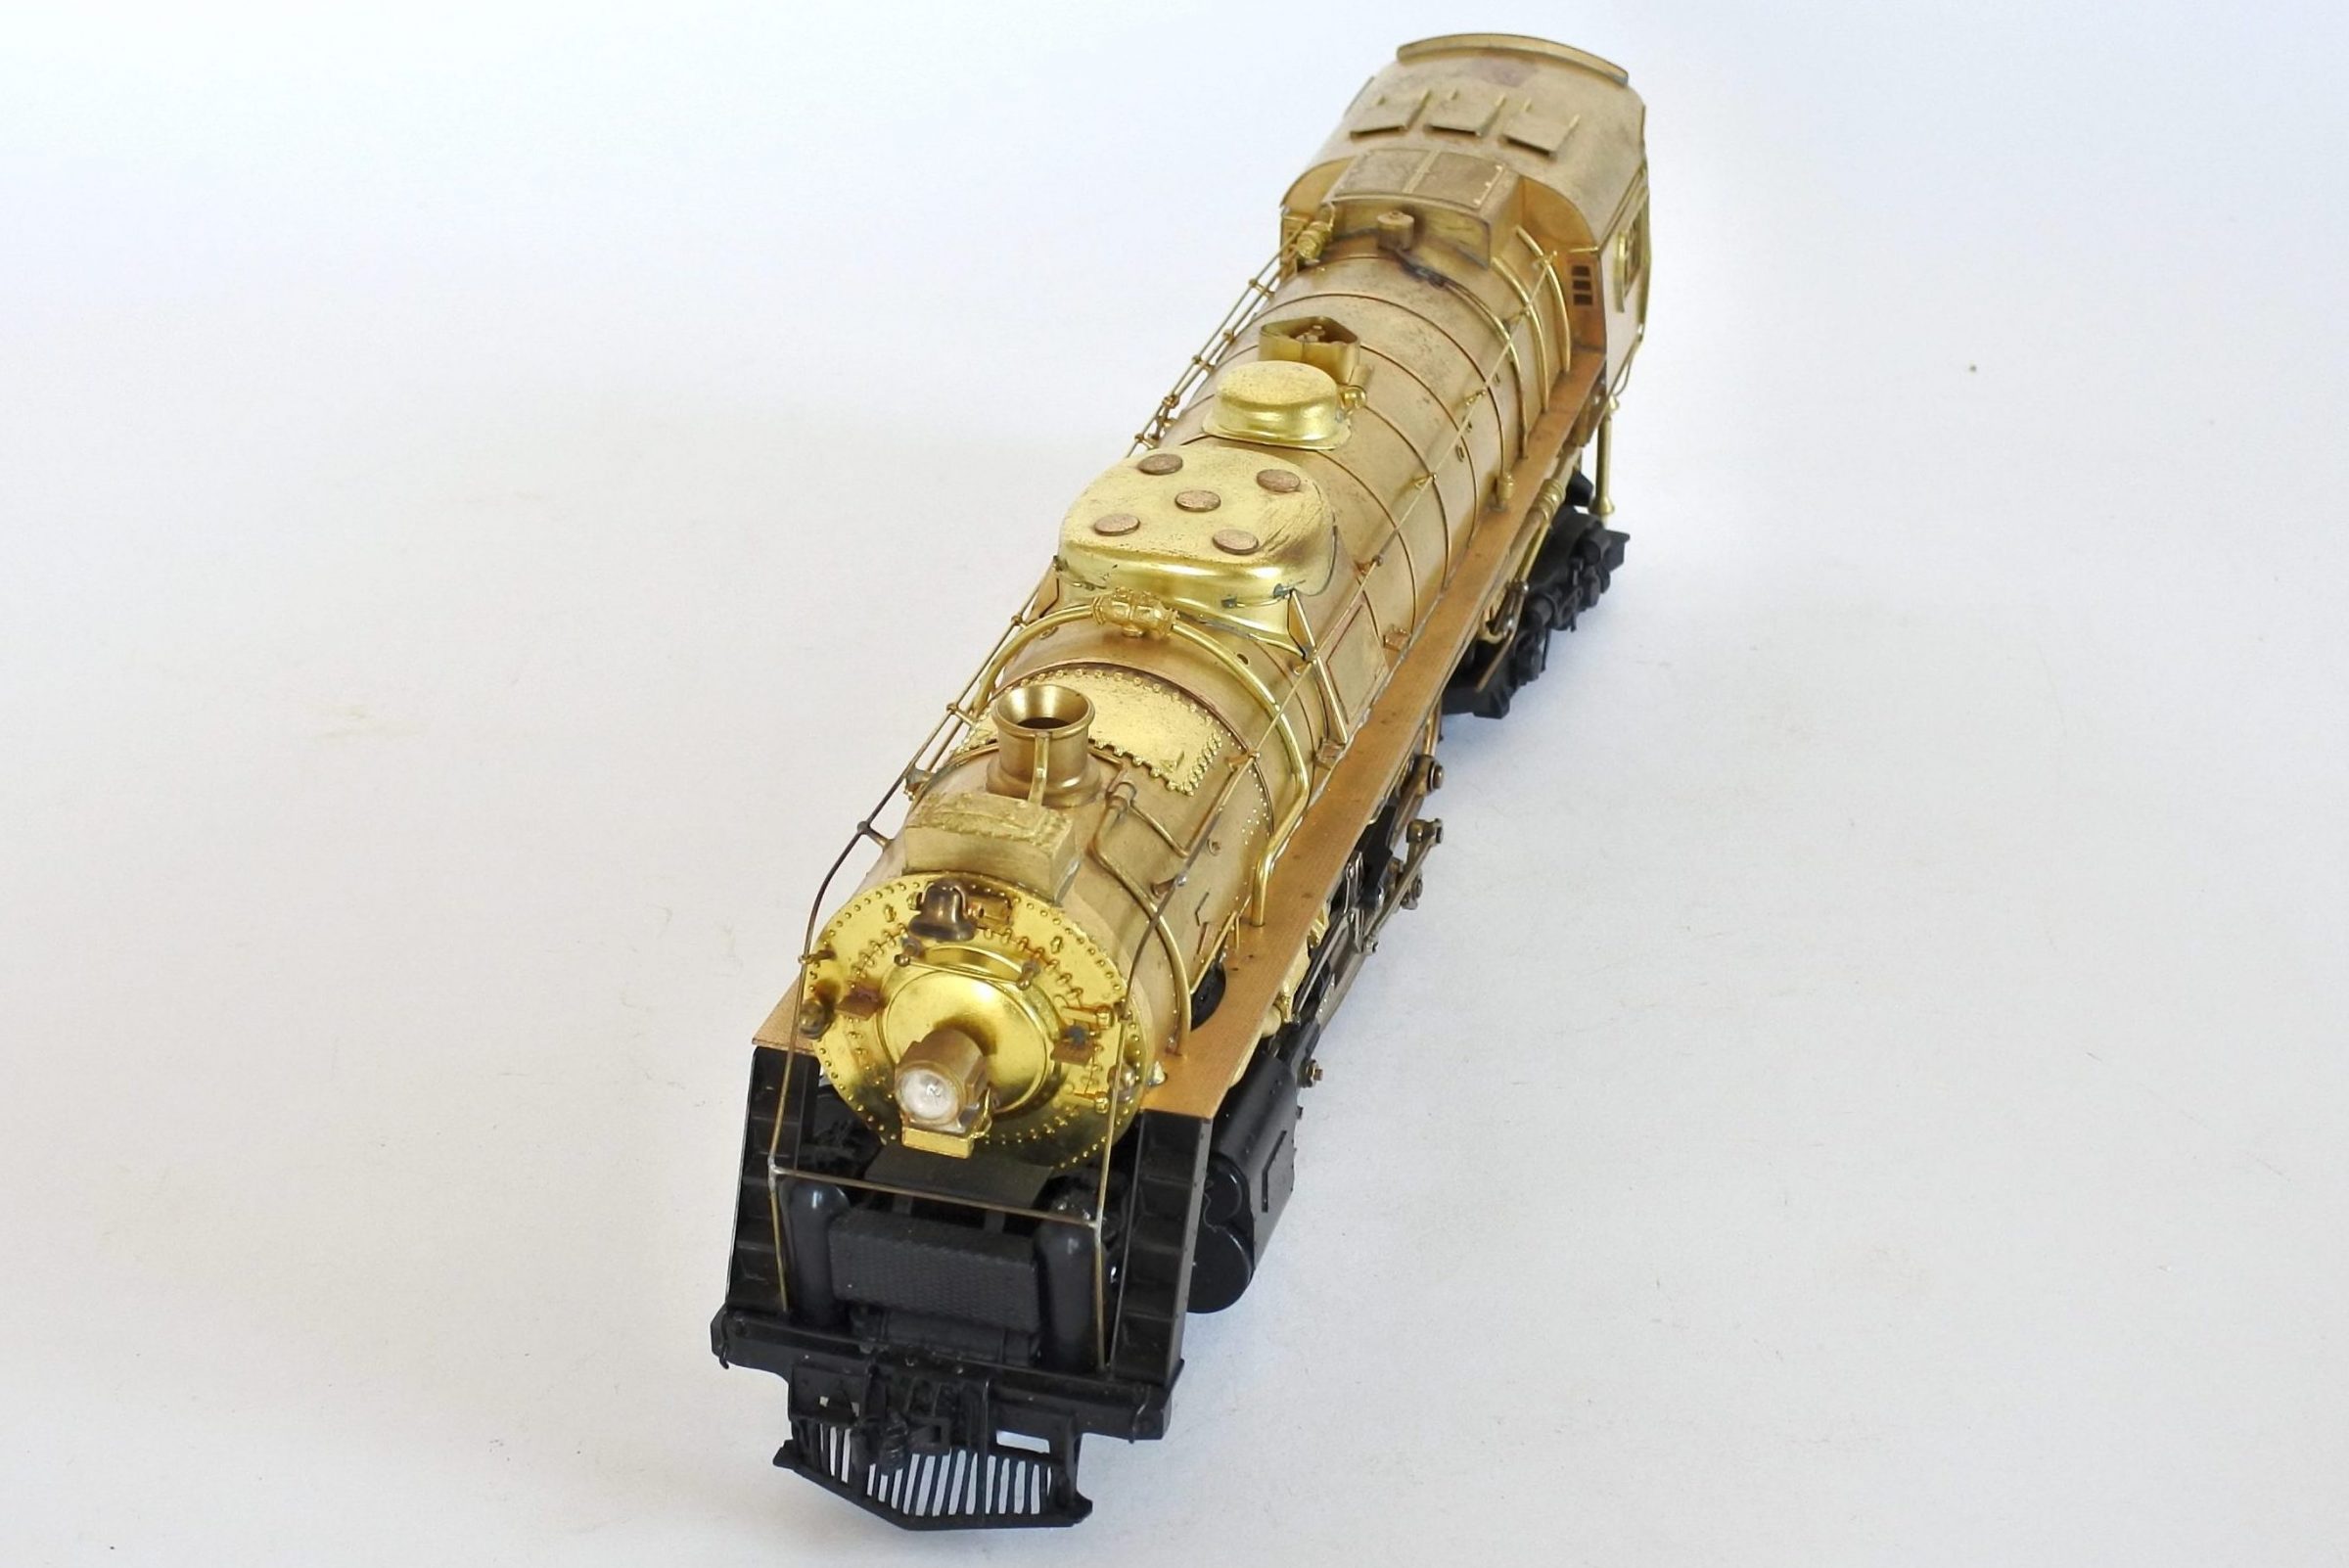 Locomotiva a vapore in ottone con tender KTM 2-8-4 Berkshire scala 0 - 5